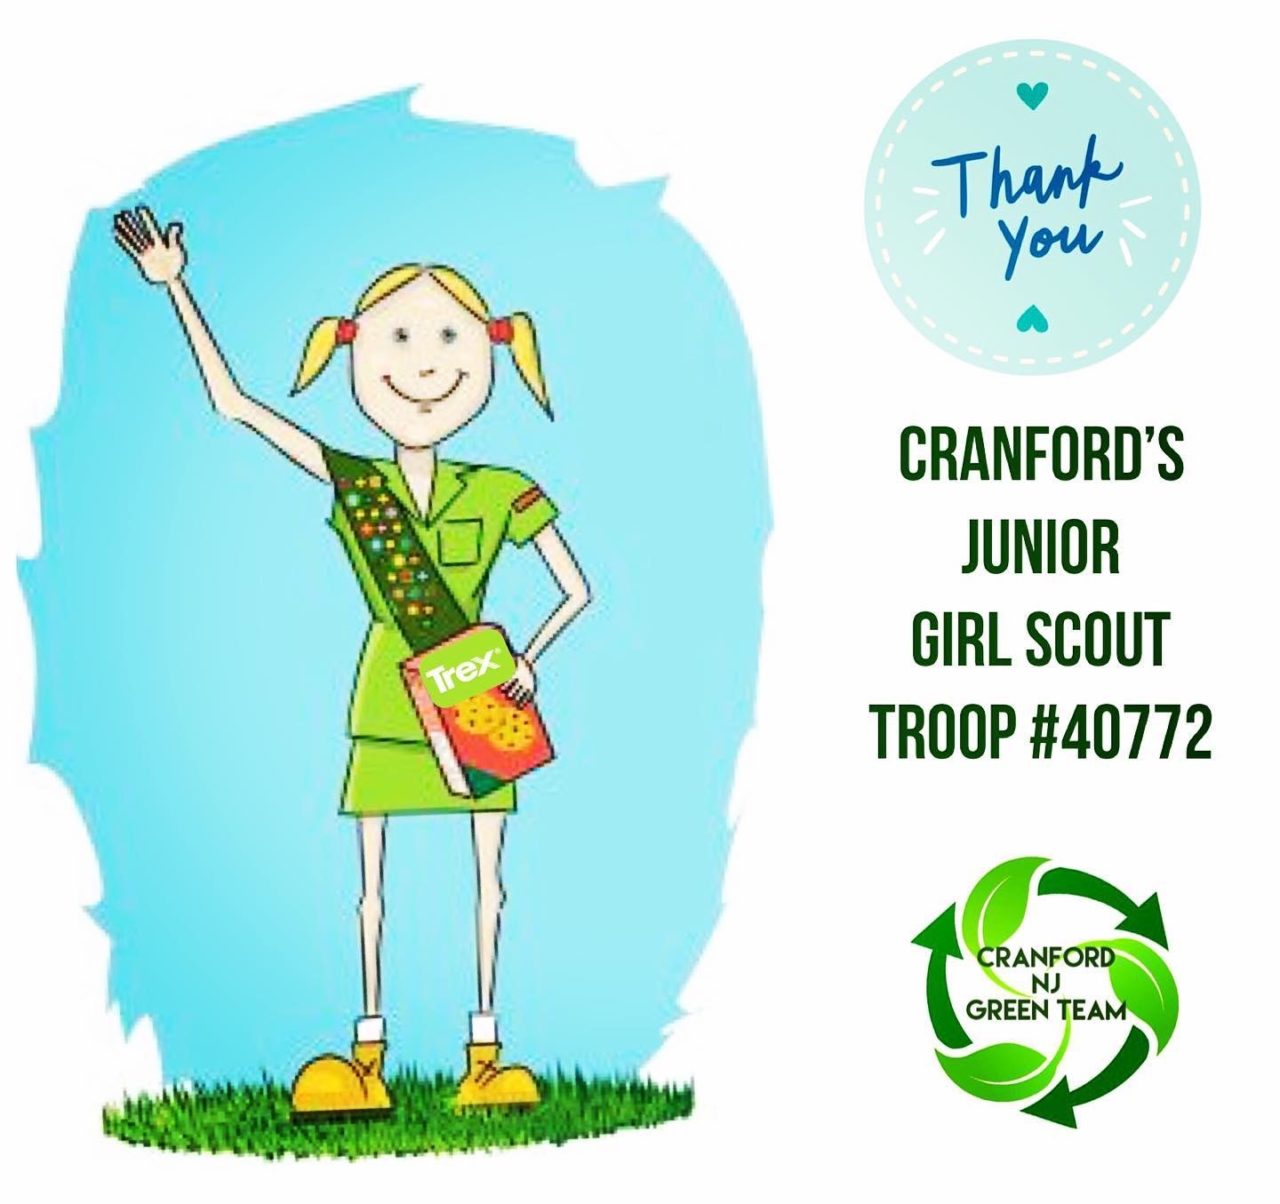 Cranford Green Team, The Cranford Green Team Wants You To Make This Holiday Season &#8220;Greener&#8221;!